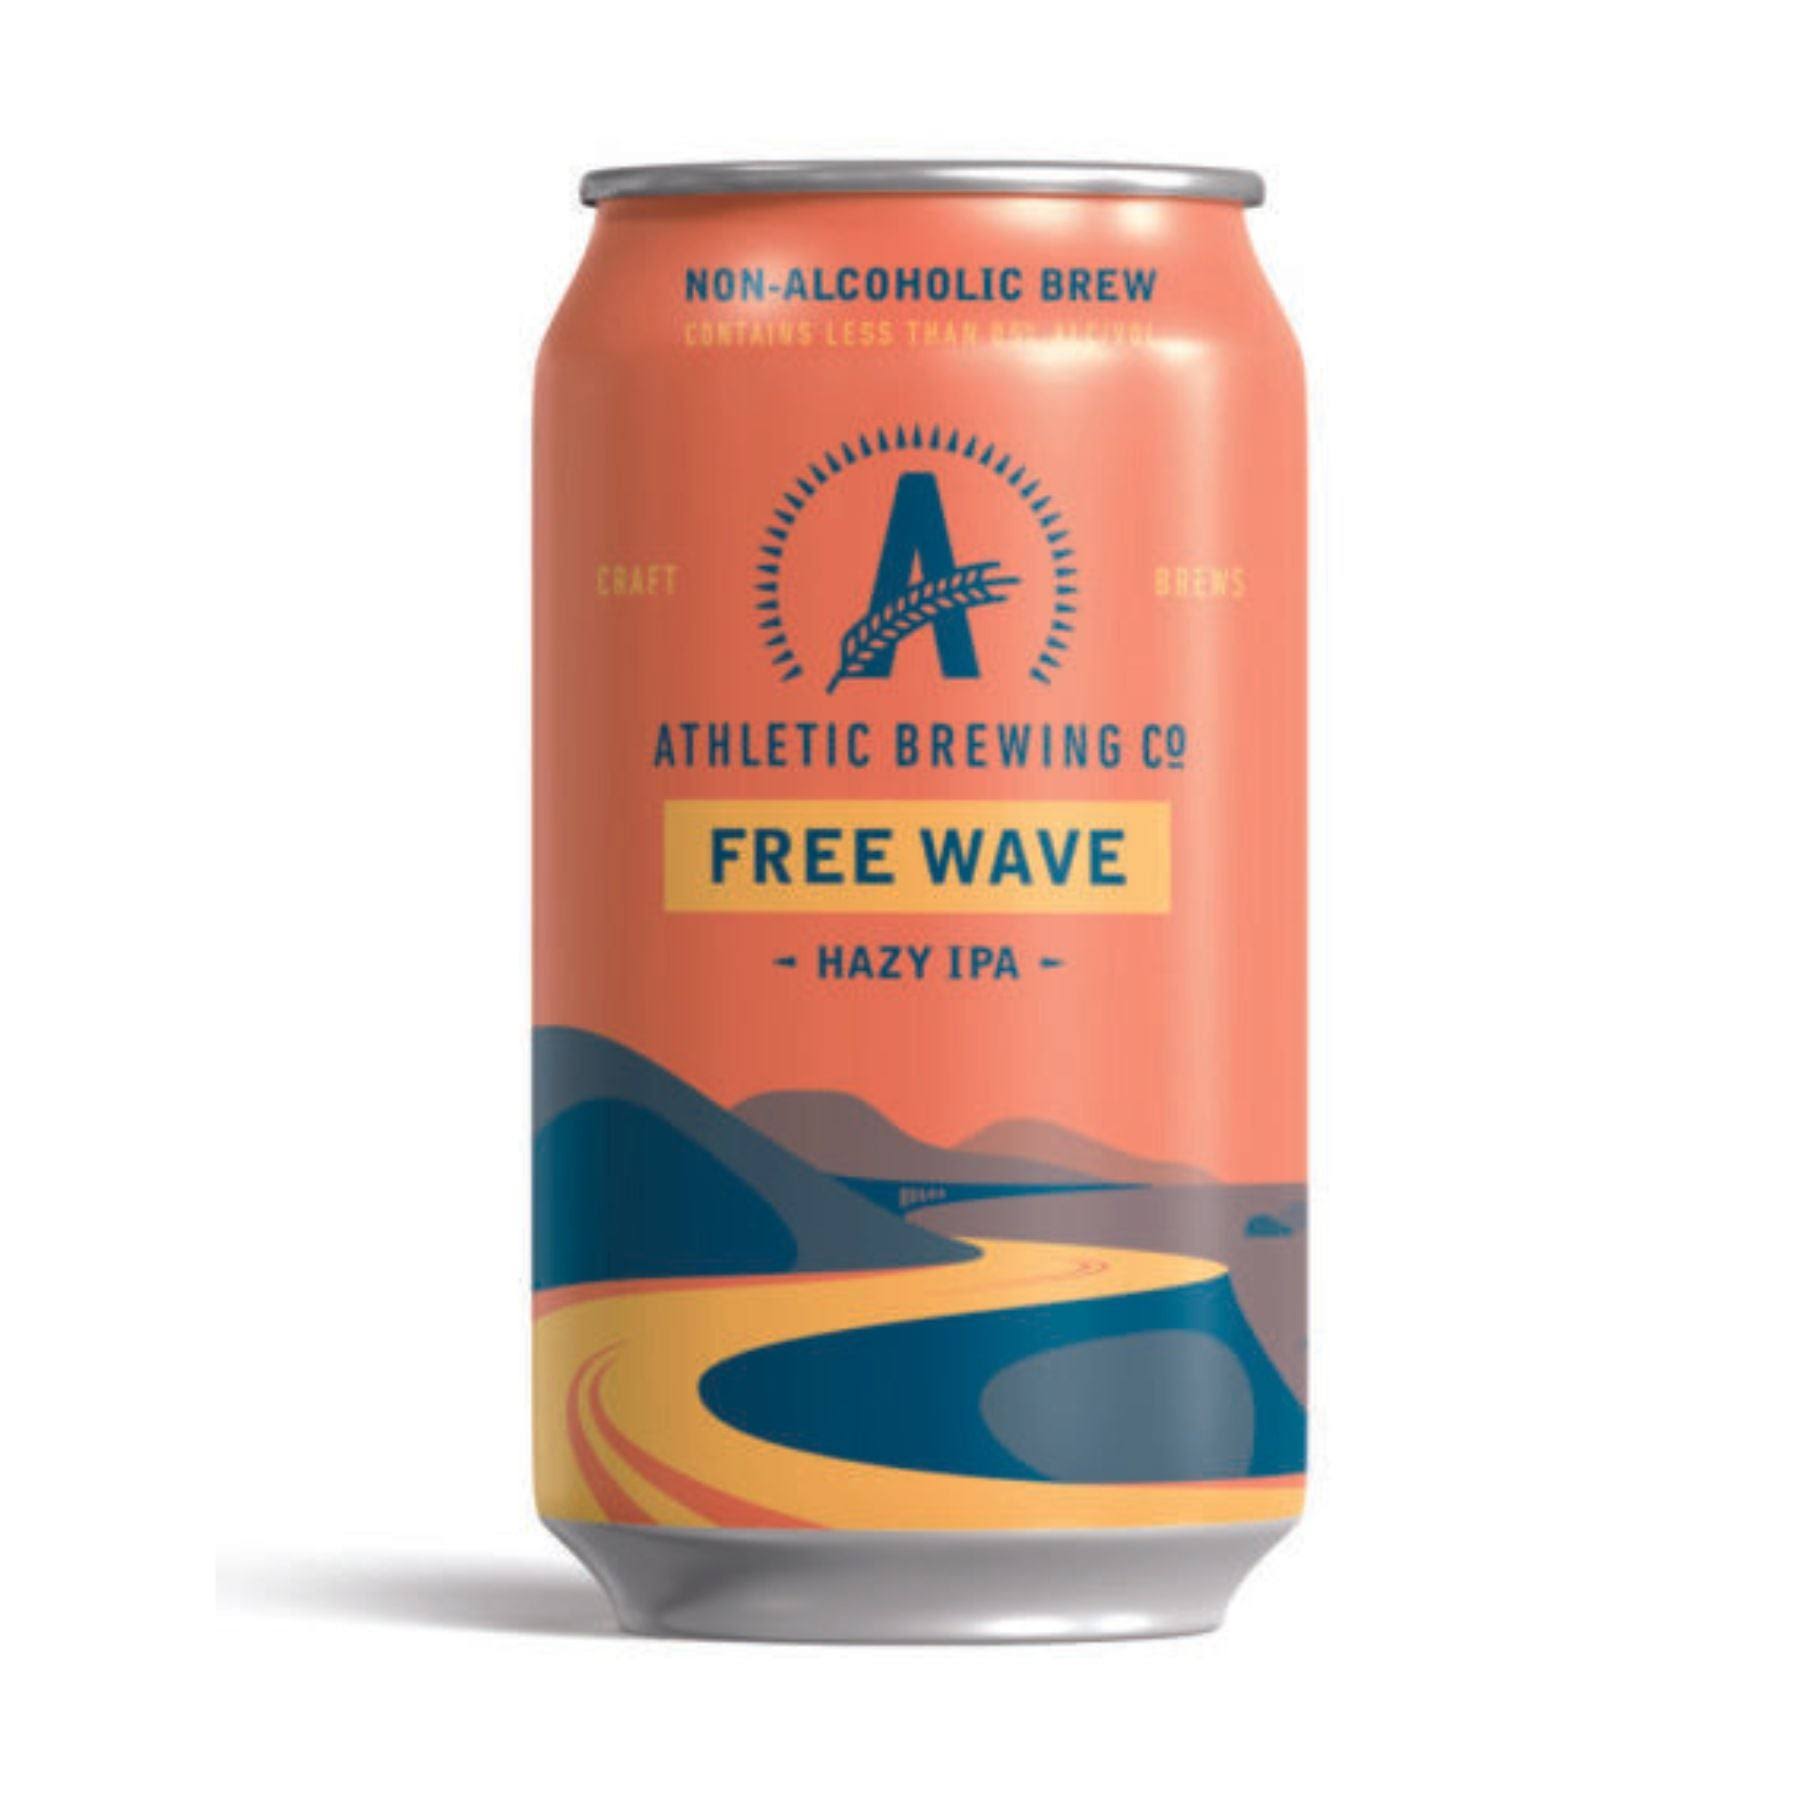 Athletic Brewing Co Beer, Hazy IPA, Free Wave - 12 fl oz